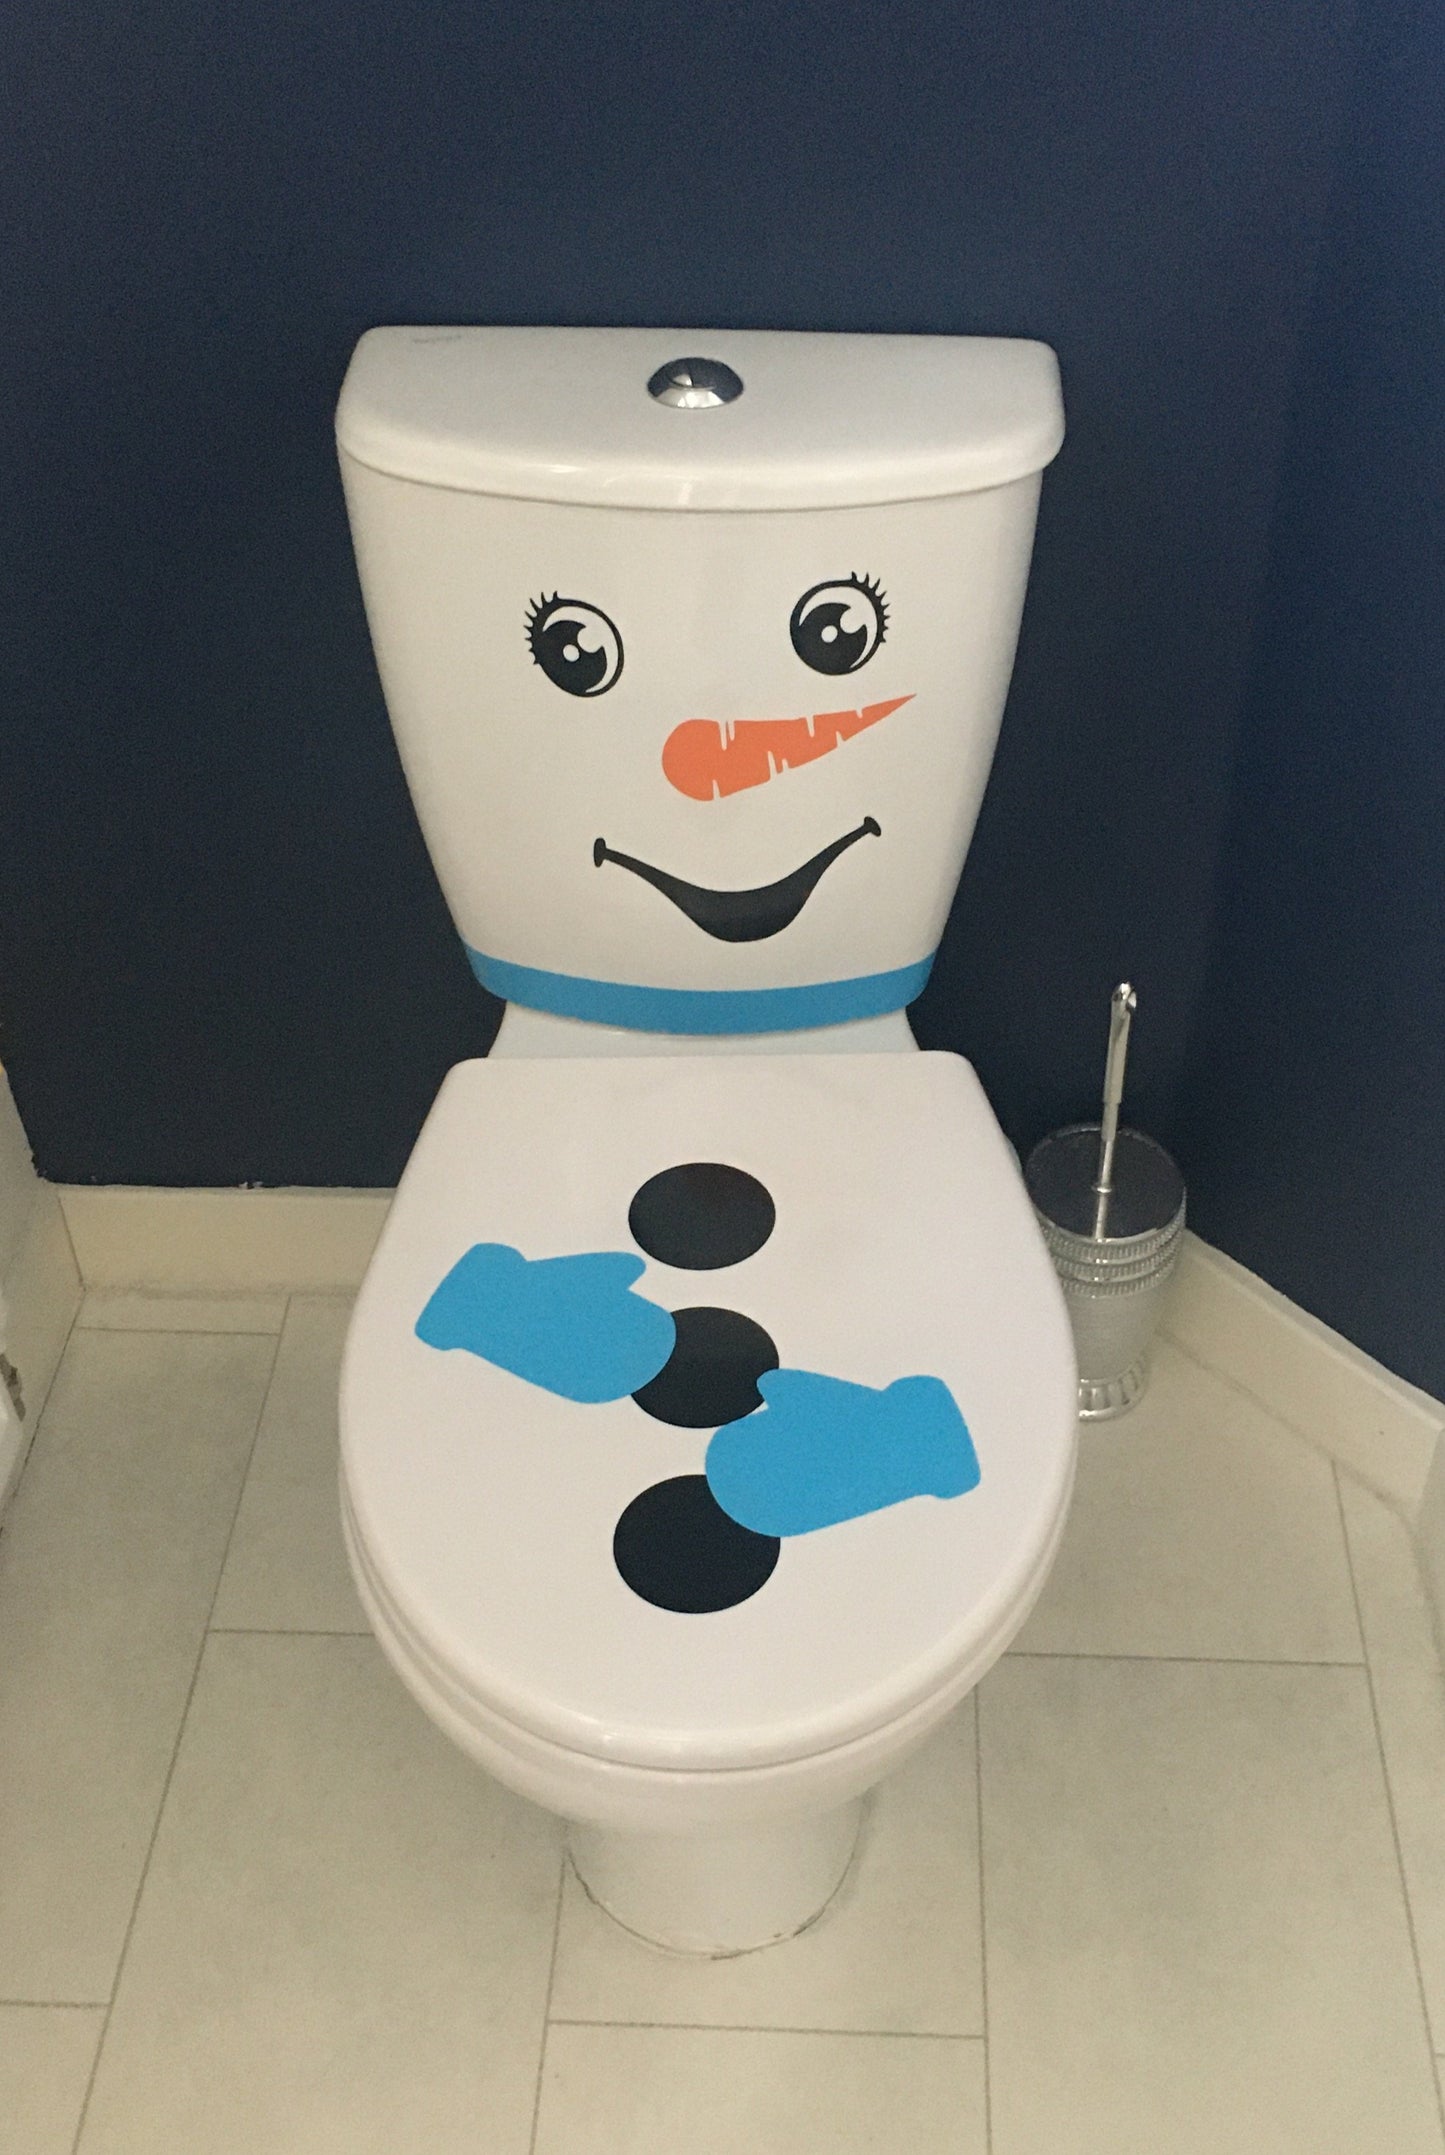 Snowman toilet decal